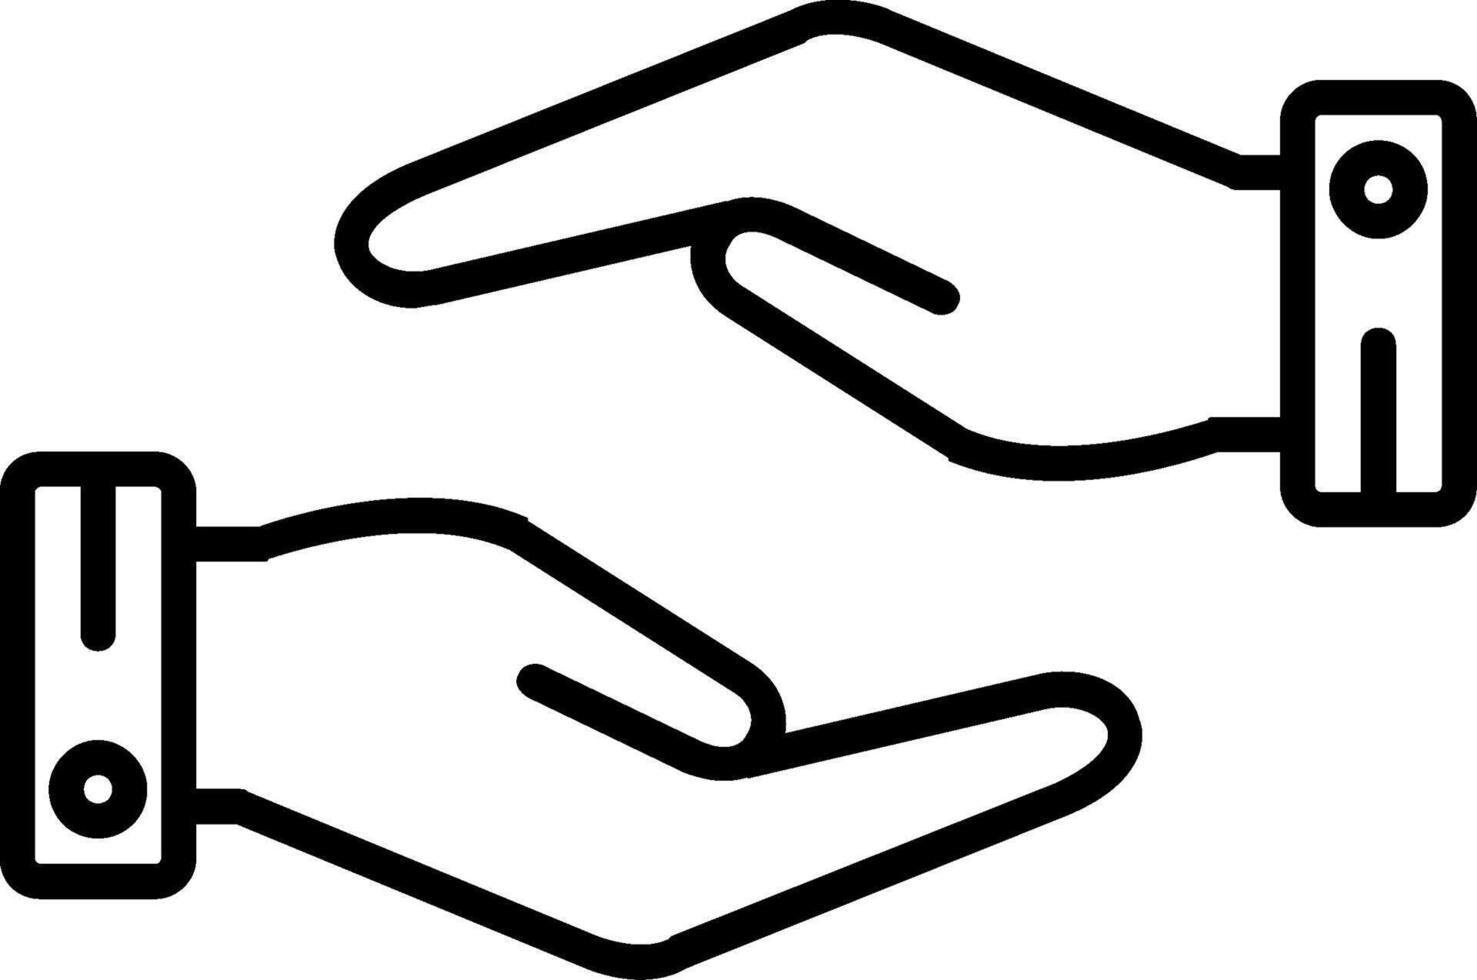 Support Hands Gesture Line Icon vector